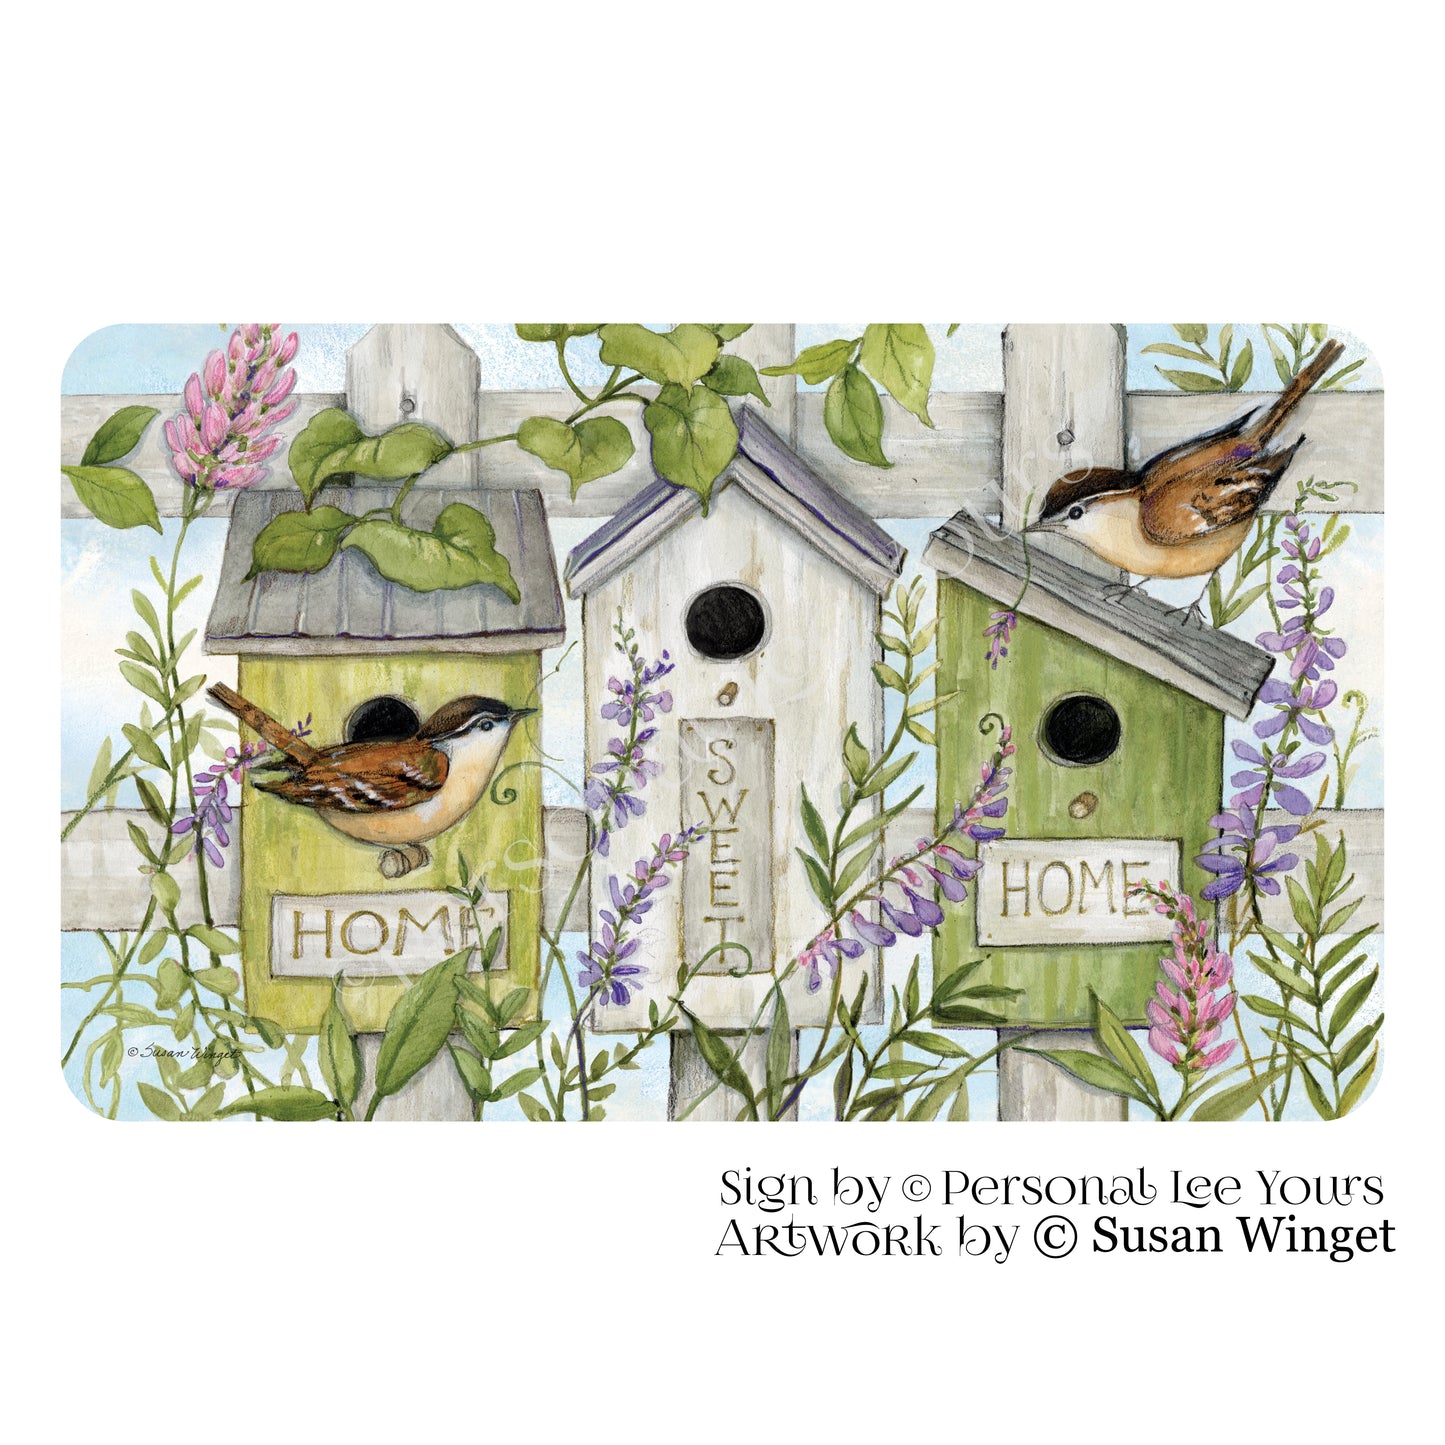 Susan Winget Exclusive Sign * Home Sweet Home Birdhouses * Horizontal * 4 Sizes * Lightweight Metal